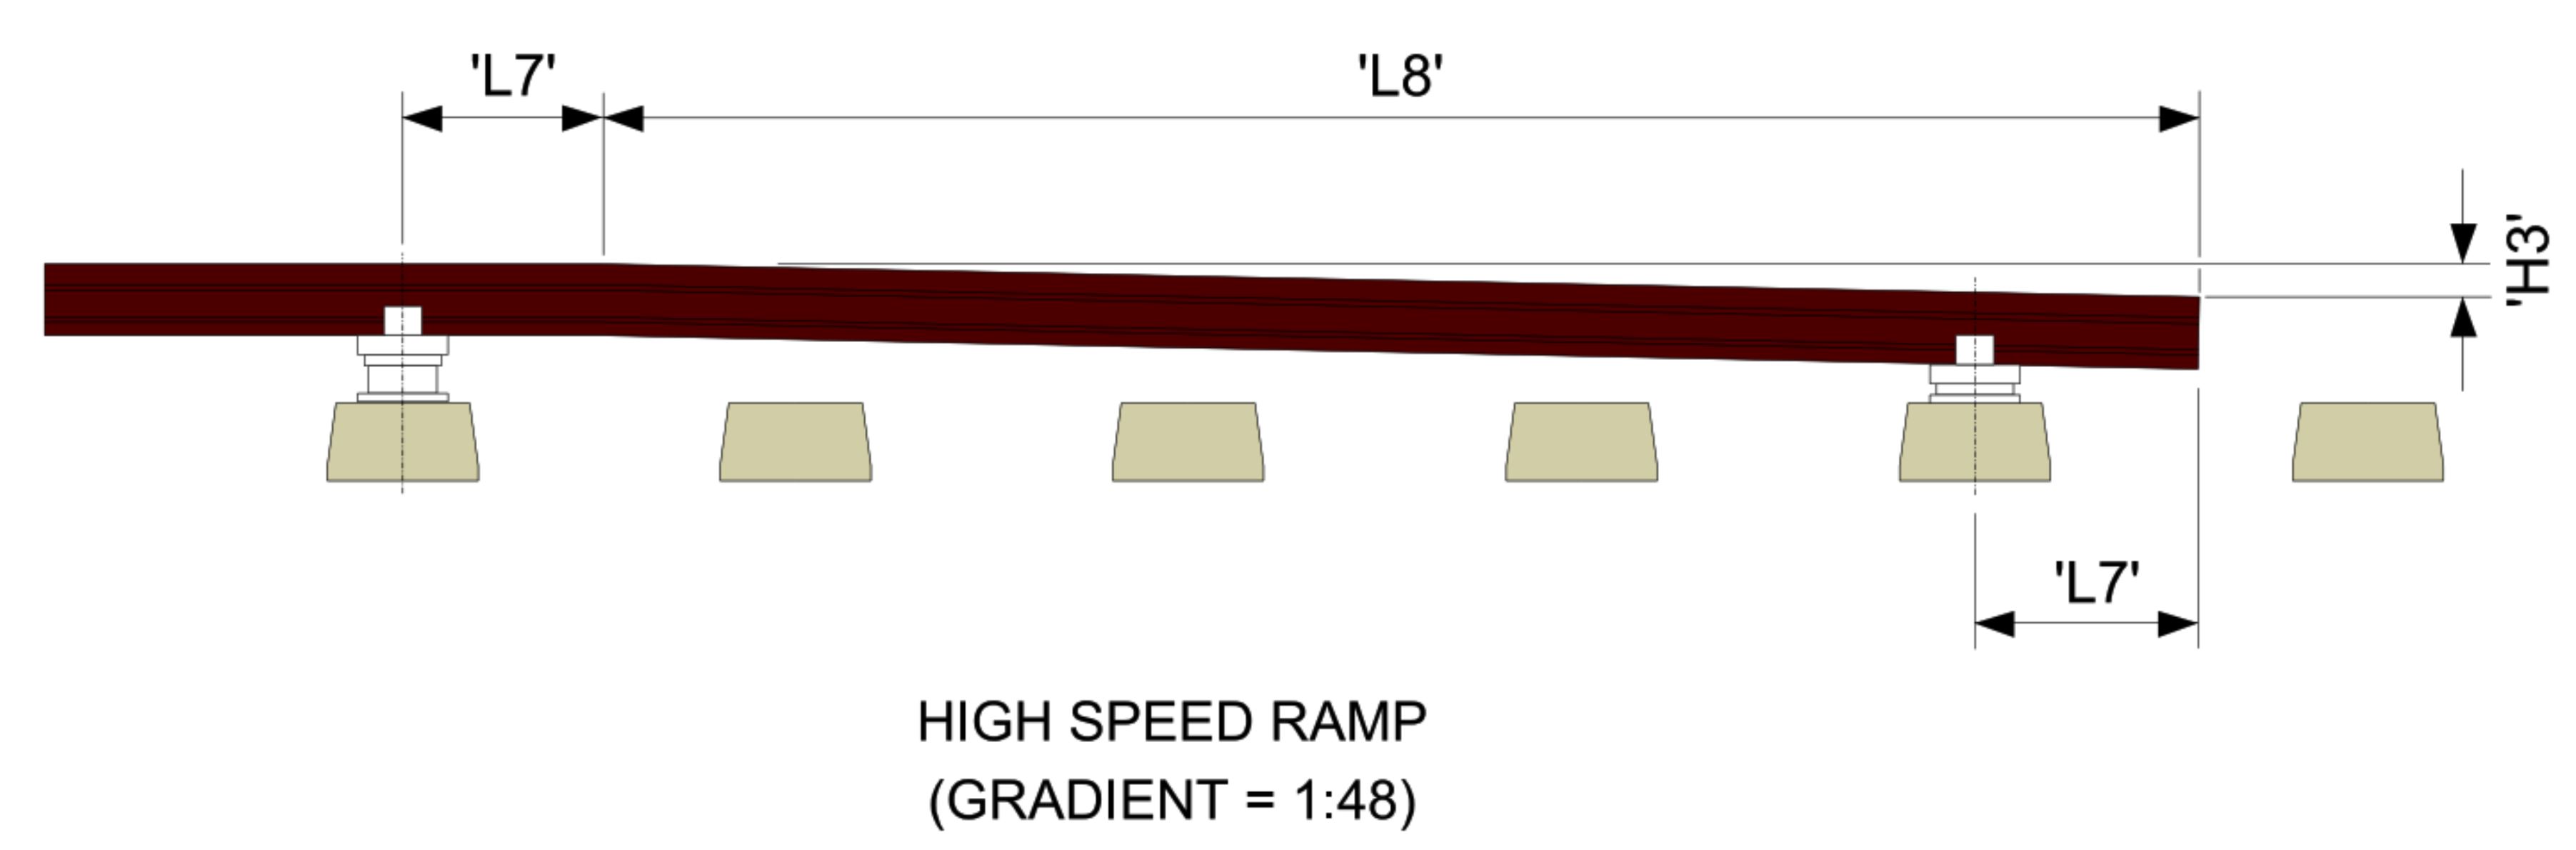 3rd Rail - High Speed Ramp